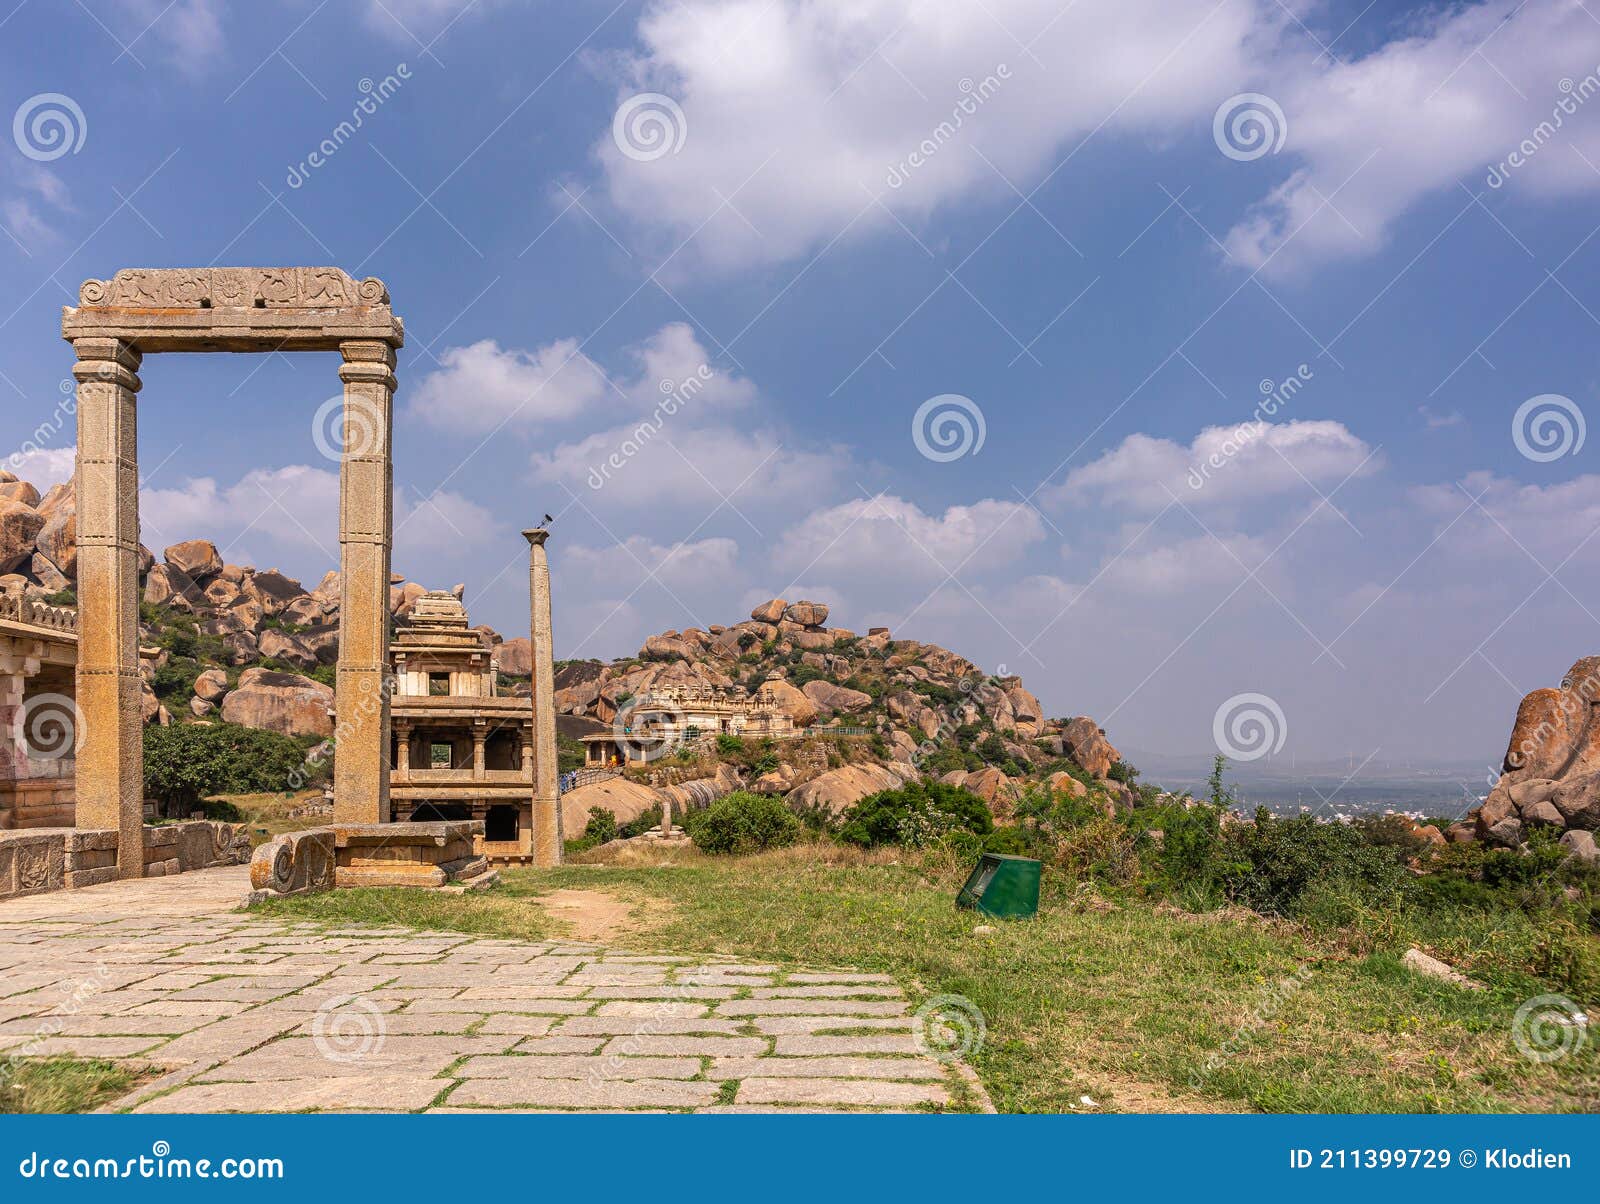 Second Arch and Beyond at Hidambeswara Temple Buildings, Fort of Chitradurga,  Karnataka, India Stock Image - Image of fortification, ruins: 211399729